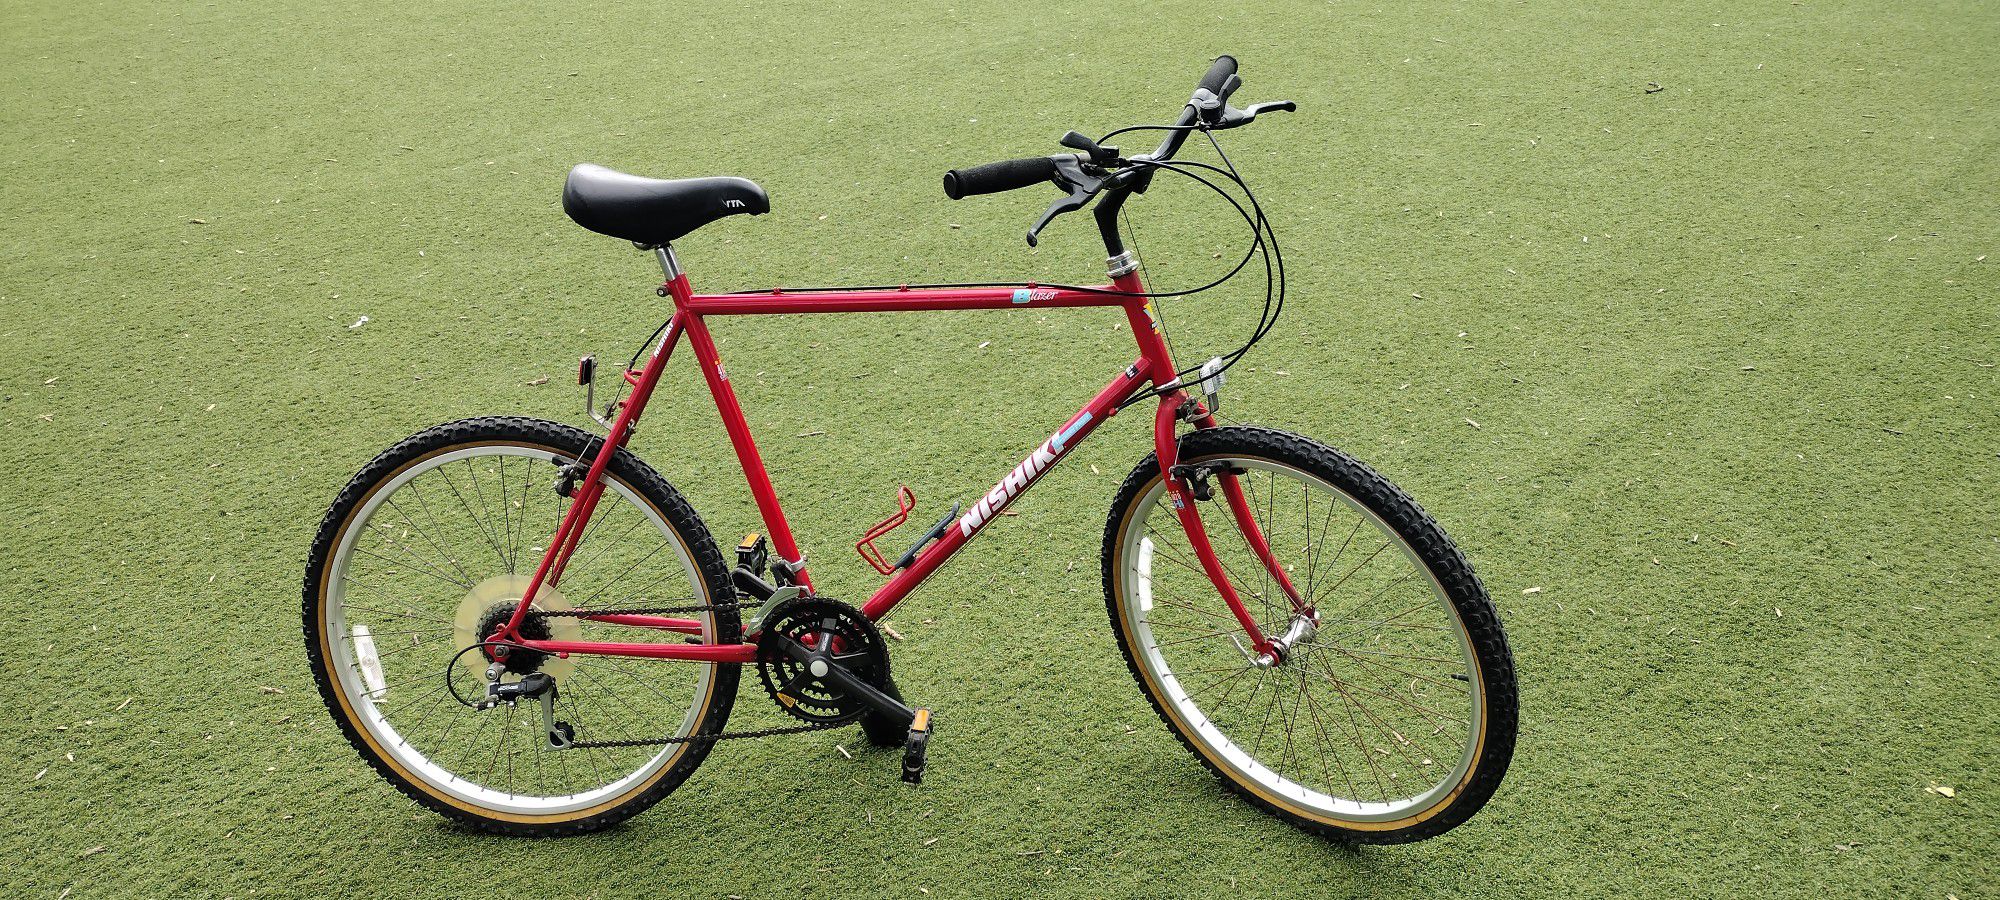 Bicycle Nishiki Blazer Large Frame Vintage Bicycle 18 speed 26 Inch Tires